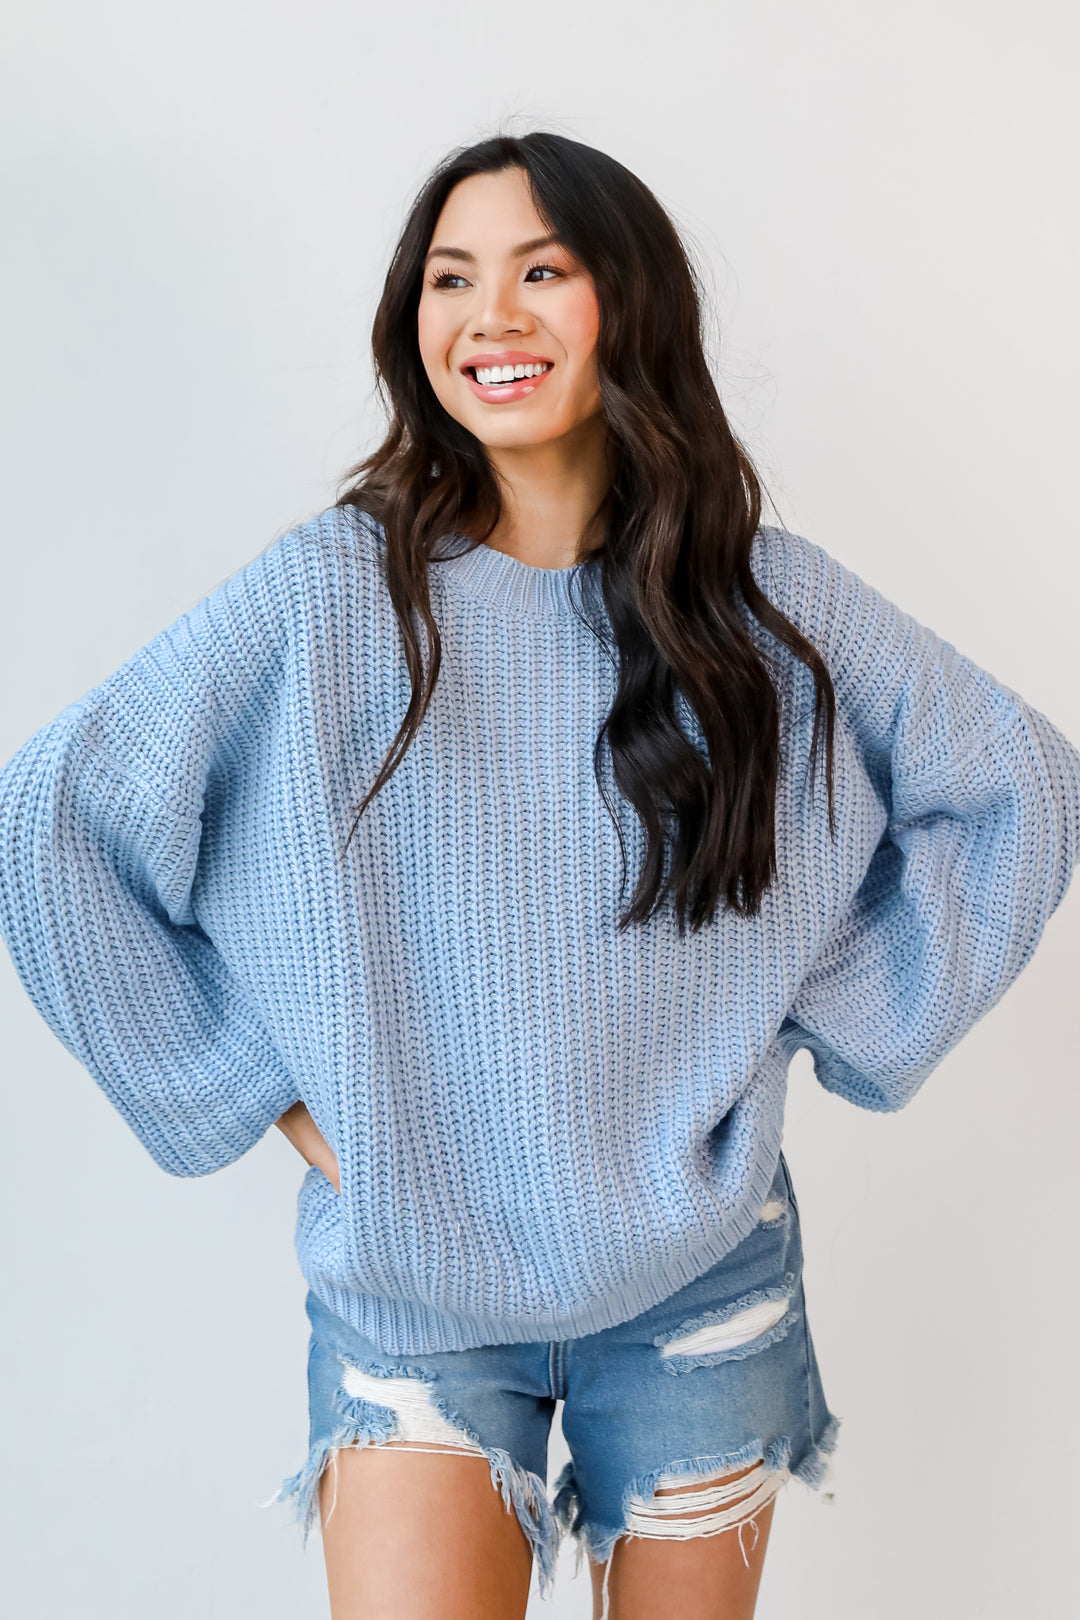 Sweater on model